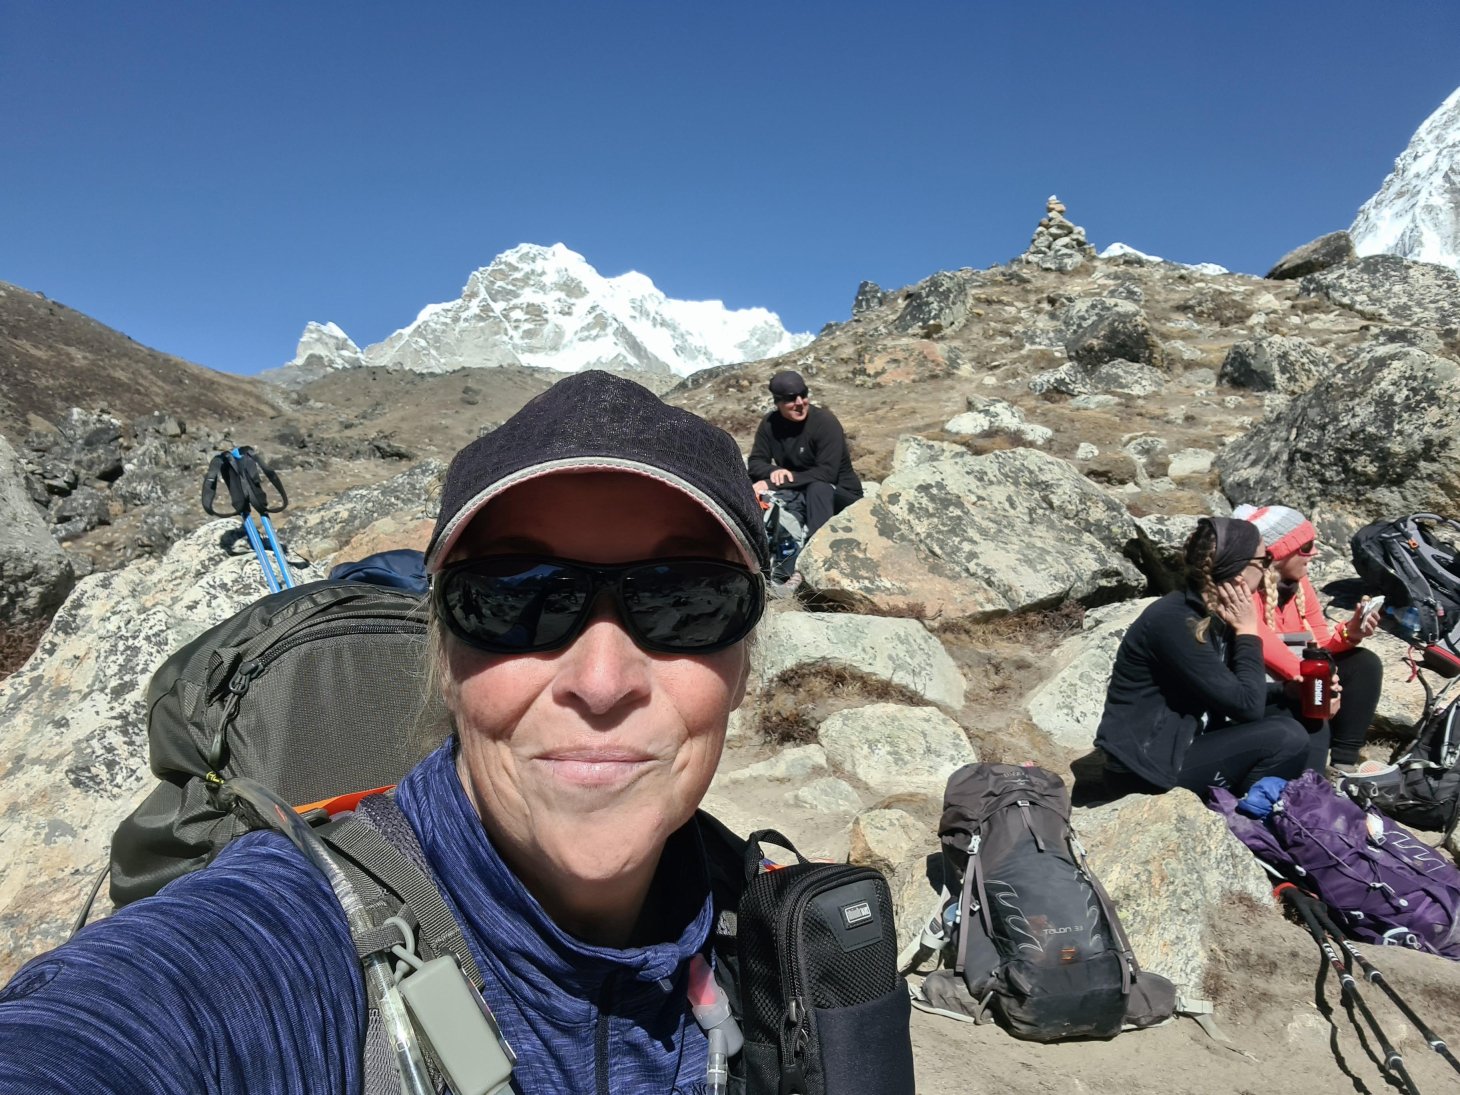 H+H Head of Merchant Accounts treks to Everest Base Camp